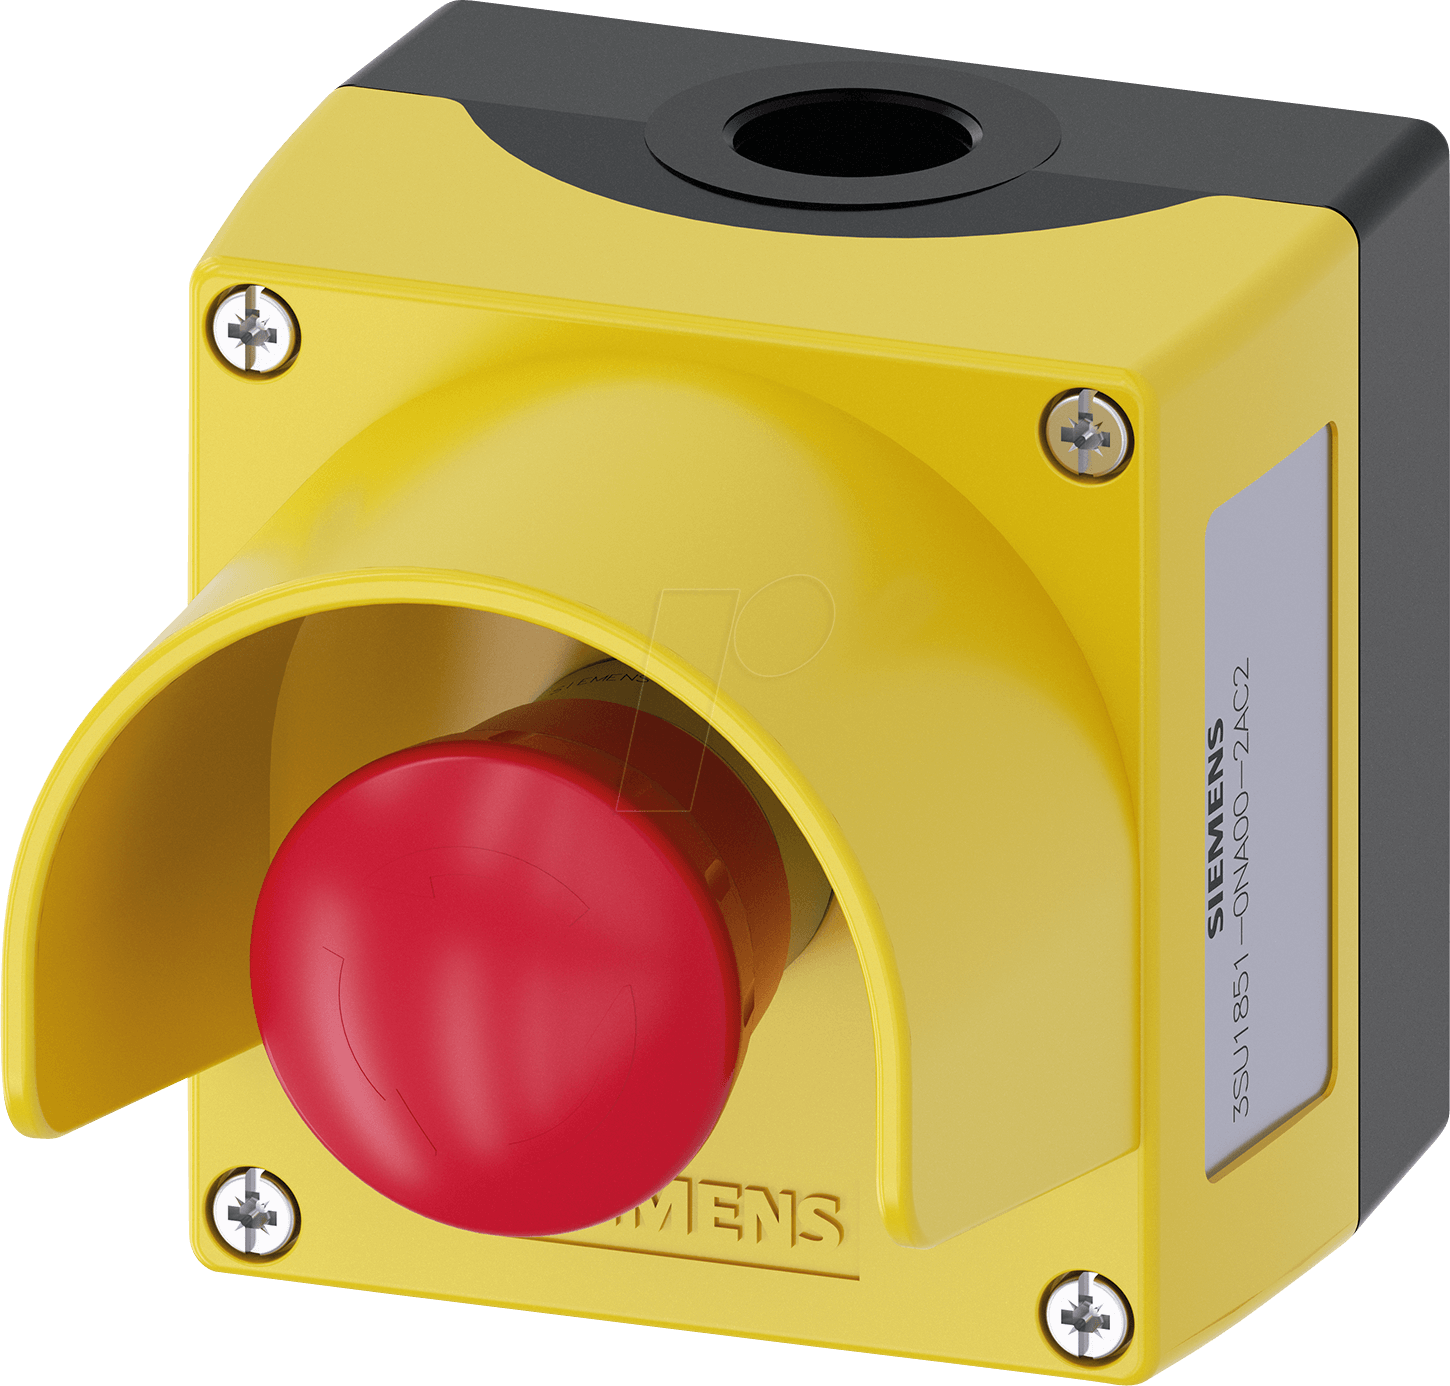 ACT51 0NA00-2AC2: Not-Aus-Schalter SIRIUS ACT, rot - gelb bei